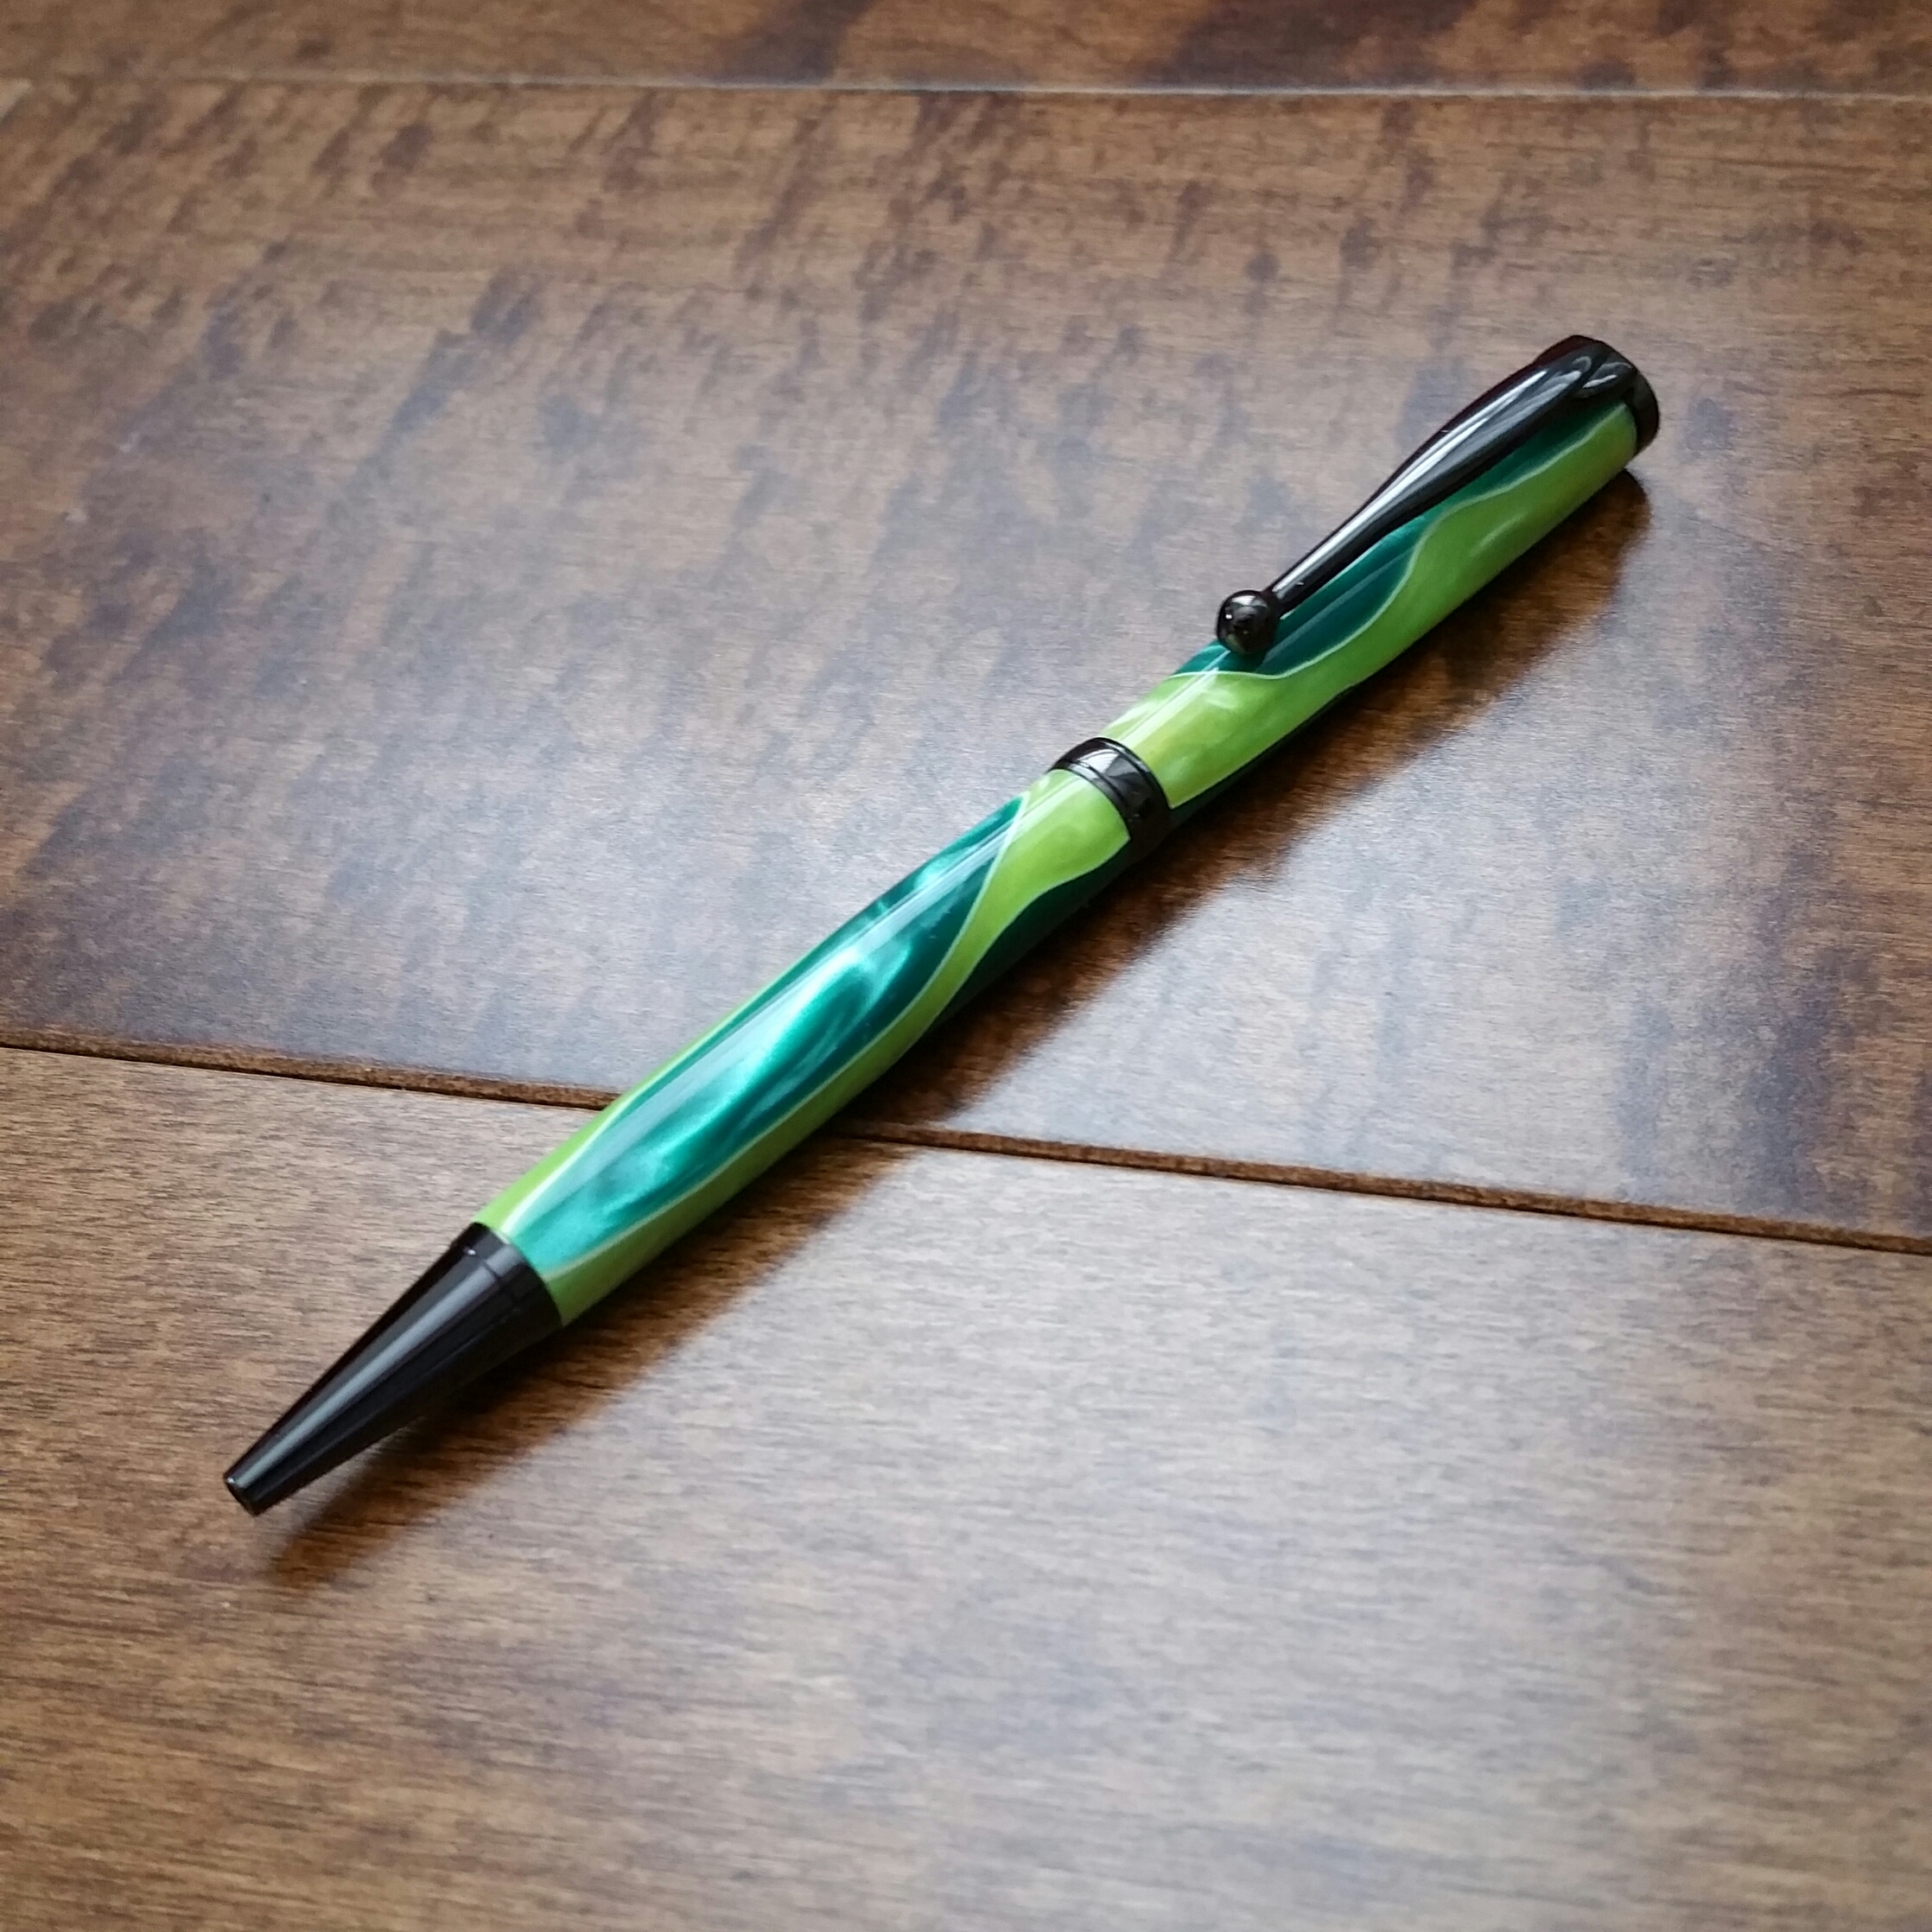 Finished pen